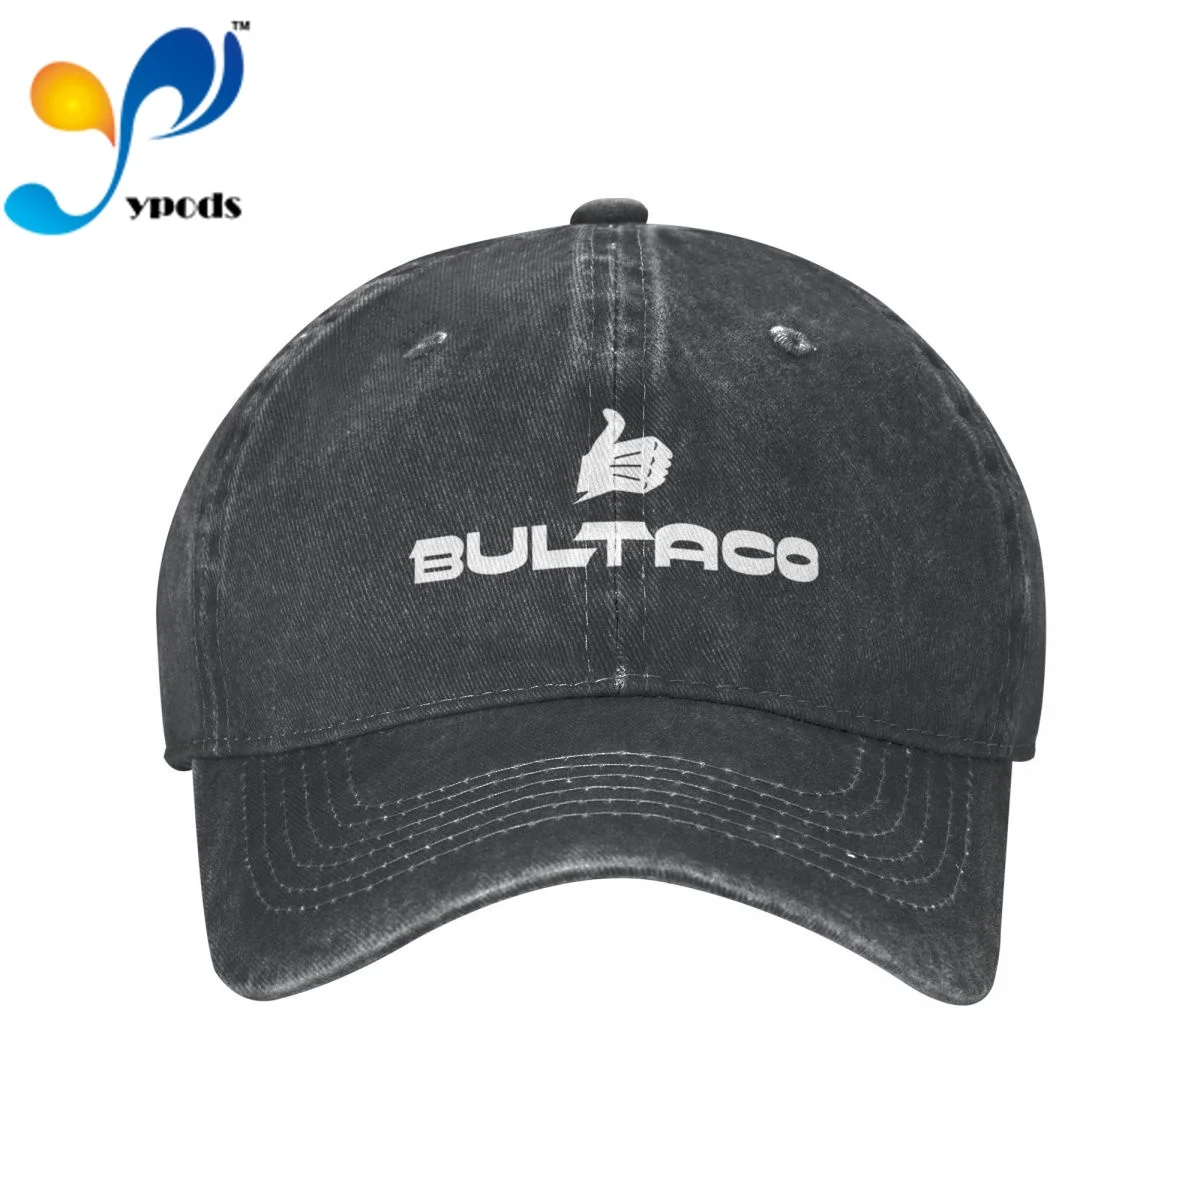 

Bultaco Cotton Cap For Men Women Gorras Snapback Caps Baseball Caps Casquette Dad Hat